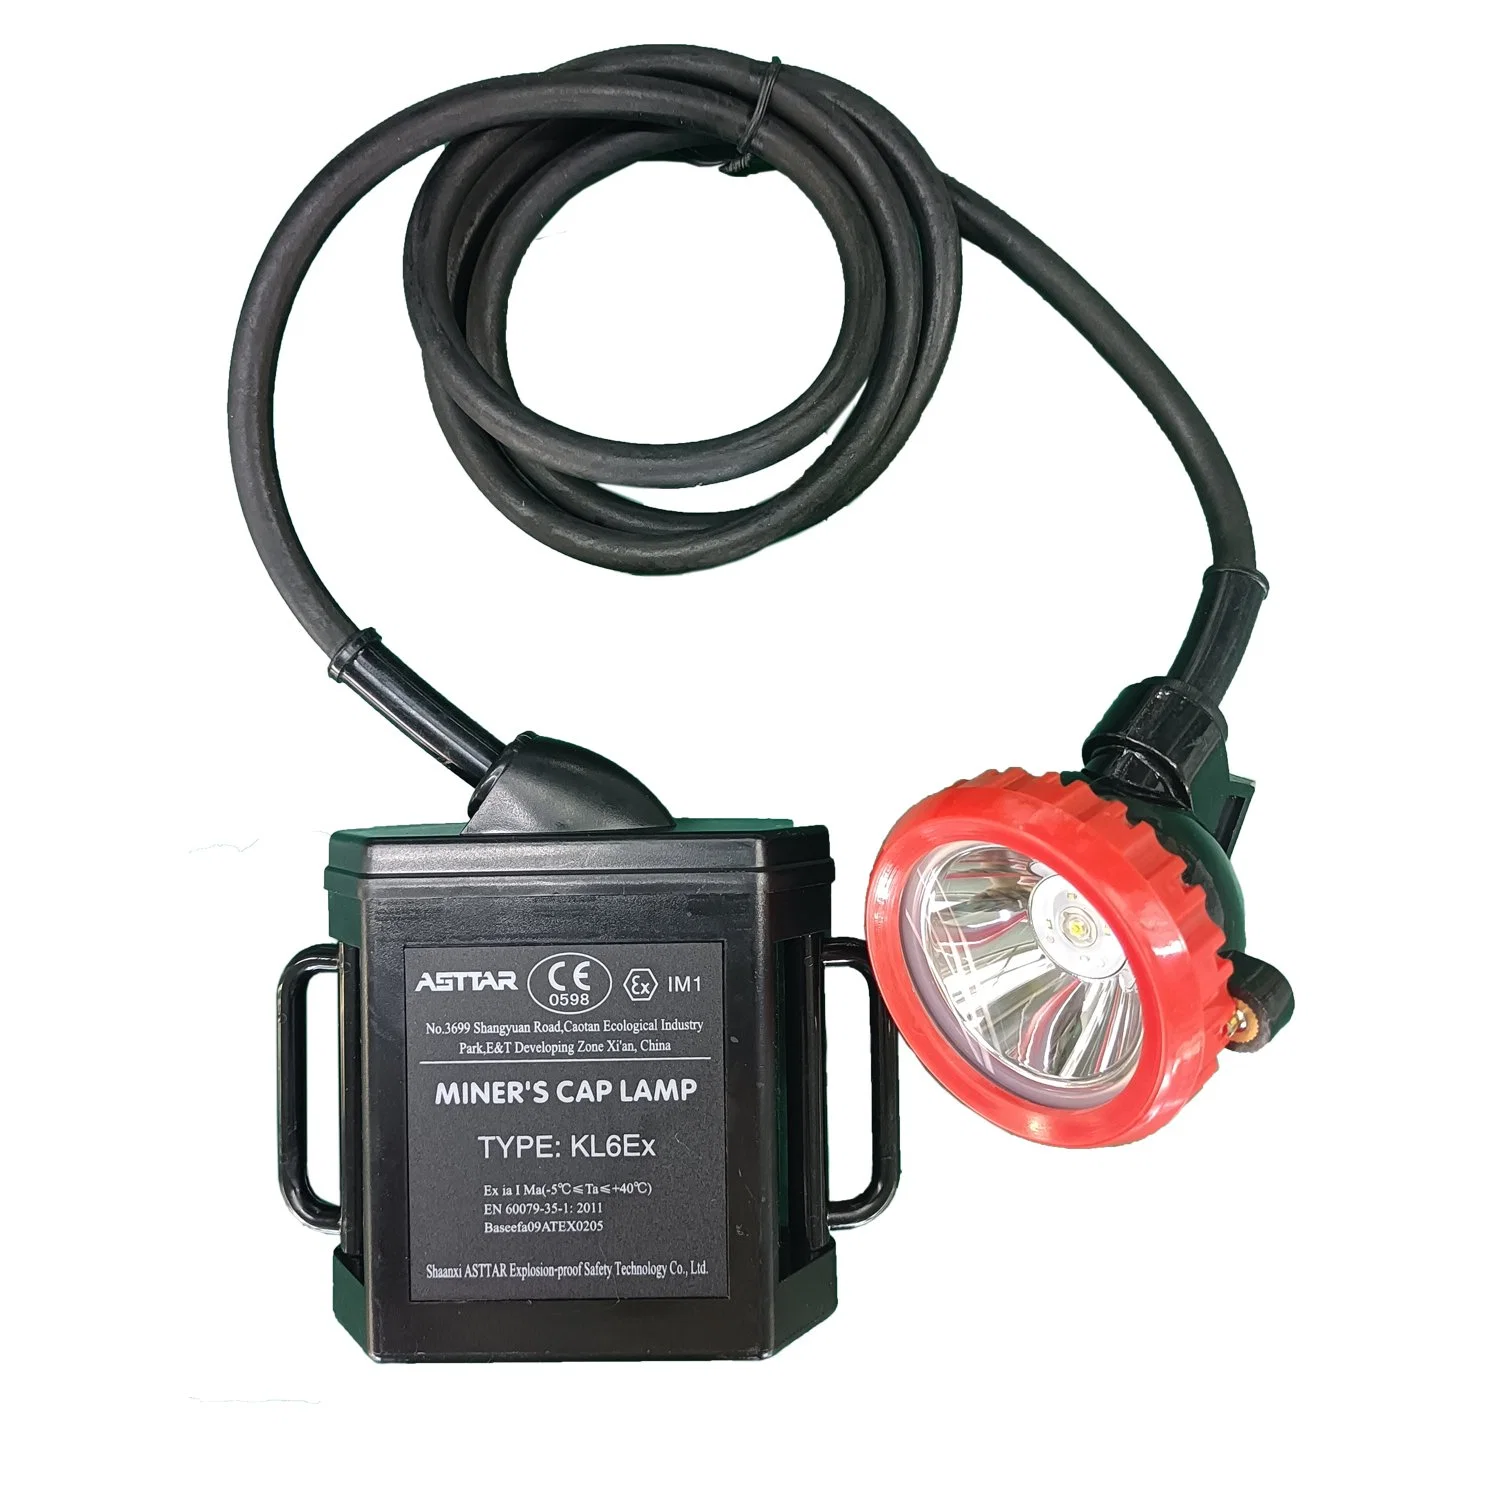 ATEX-zertifizierter Asttar LED-Scheinwerfer, Bergbaulampe, LED-Cap-Lampe des Bergarbeiters